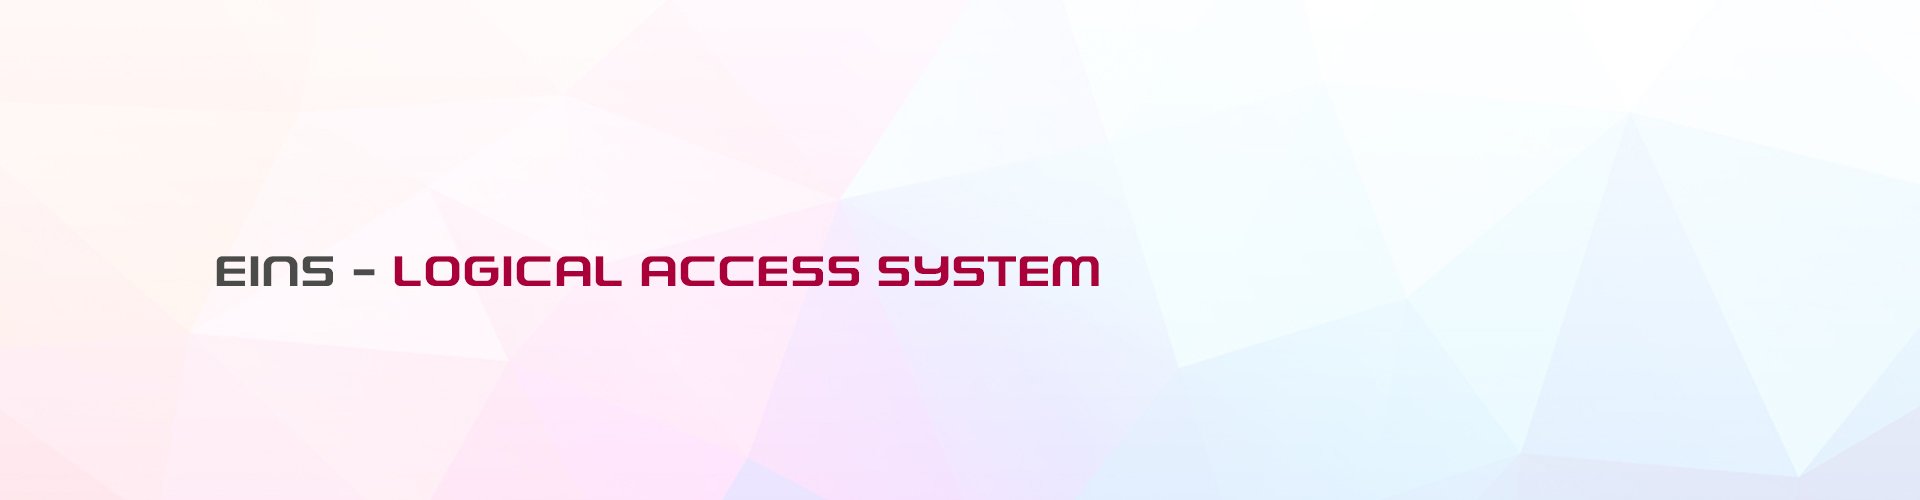 EINS - Logical access system